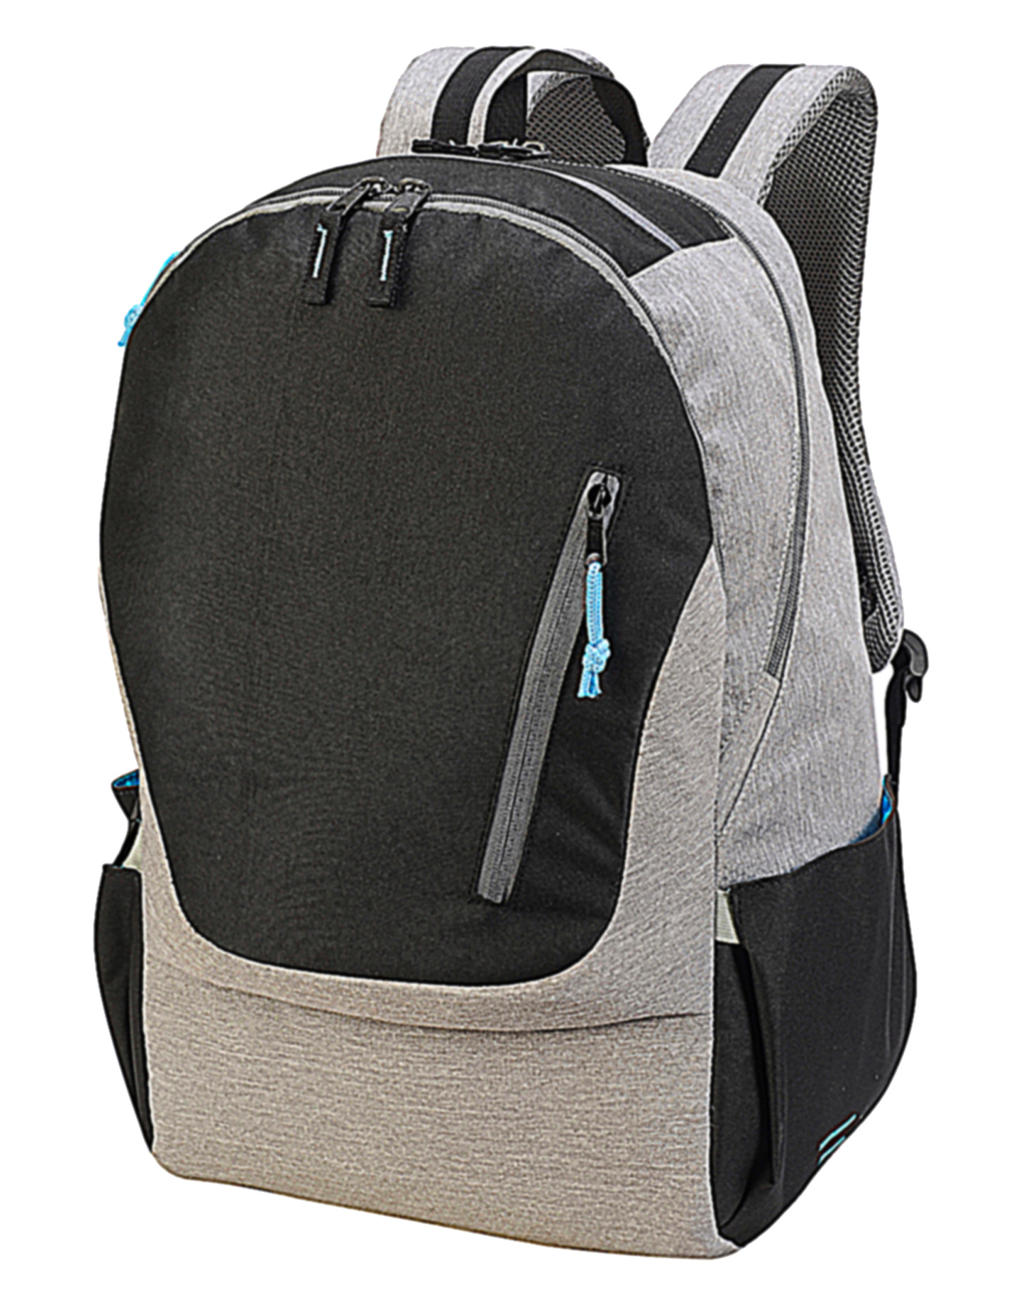  Cologne Absolute Laptop Backpack in Farbe Black/Grey Melange